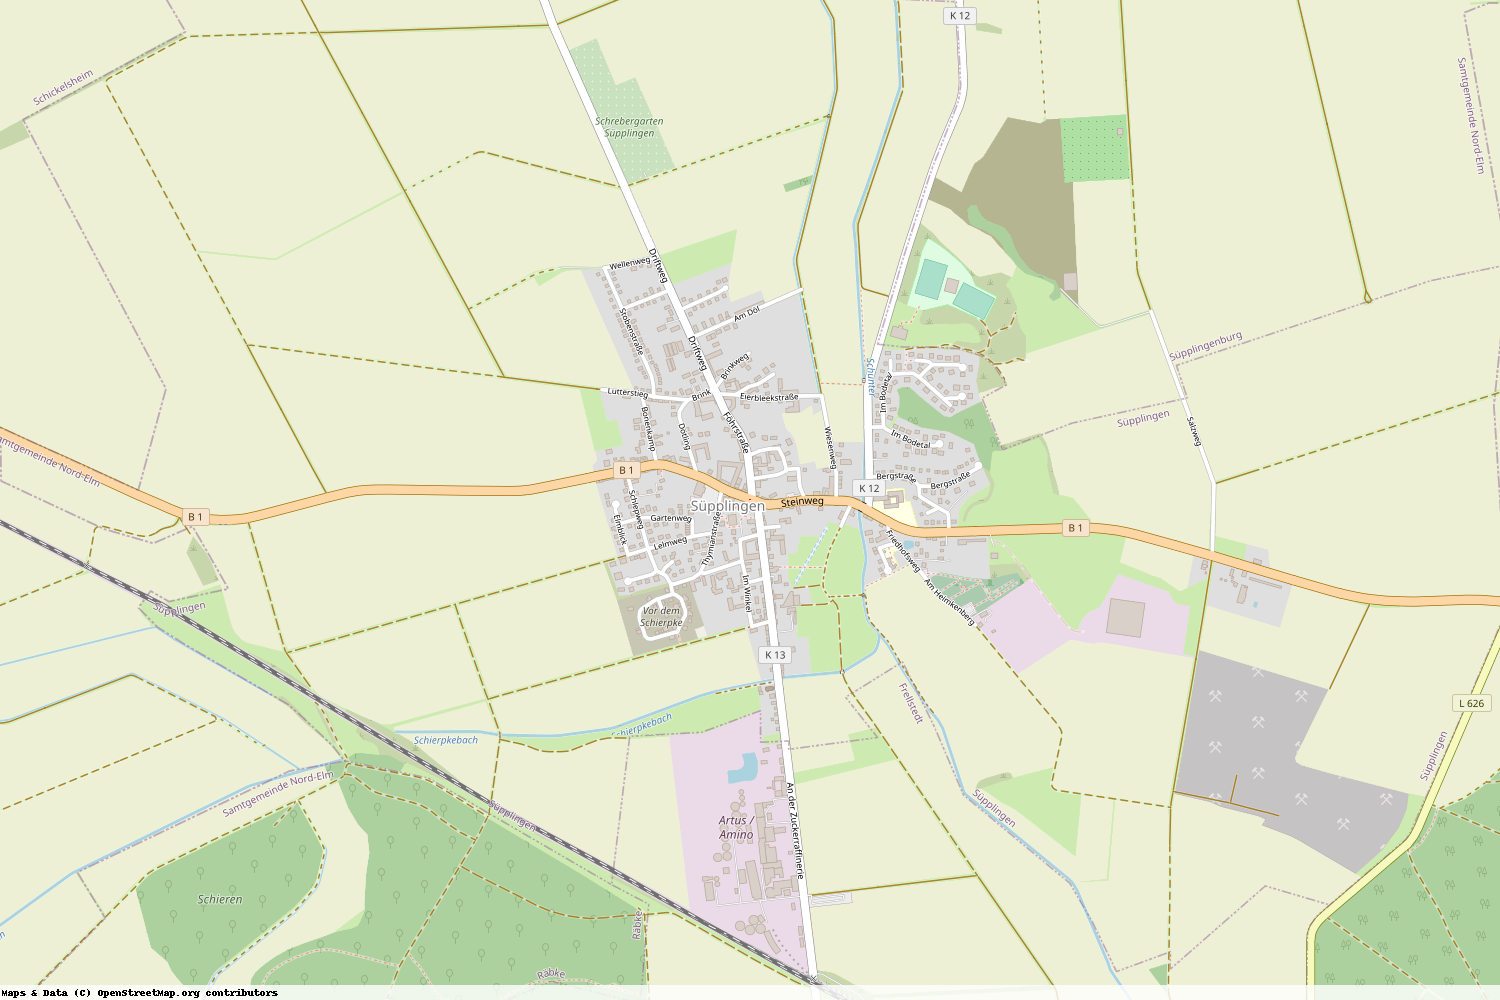 Ist gerade Stromausfall in Niedersachsen - Helmstedt - Süpplingen?